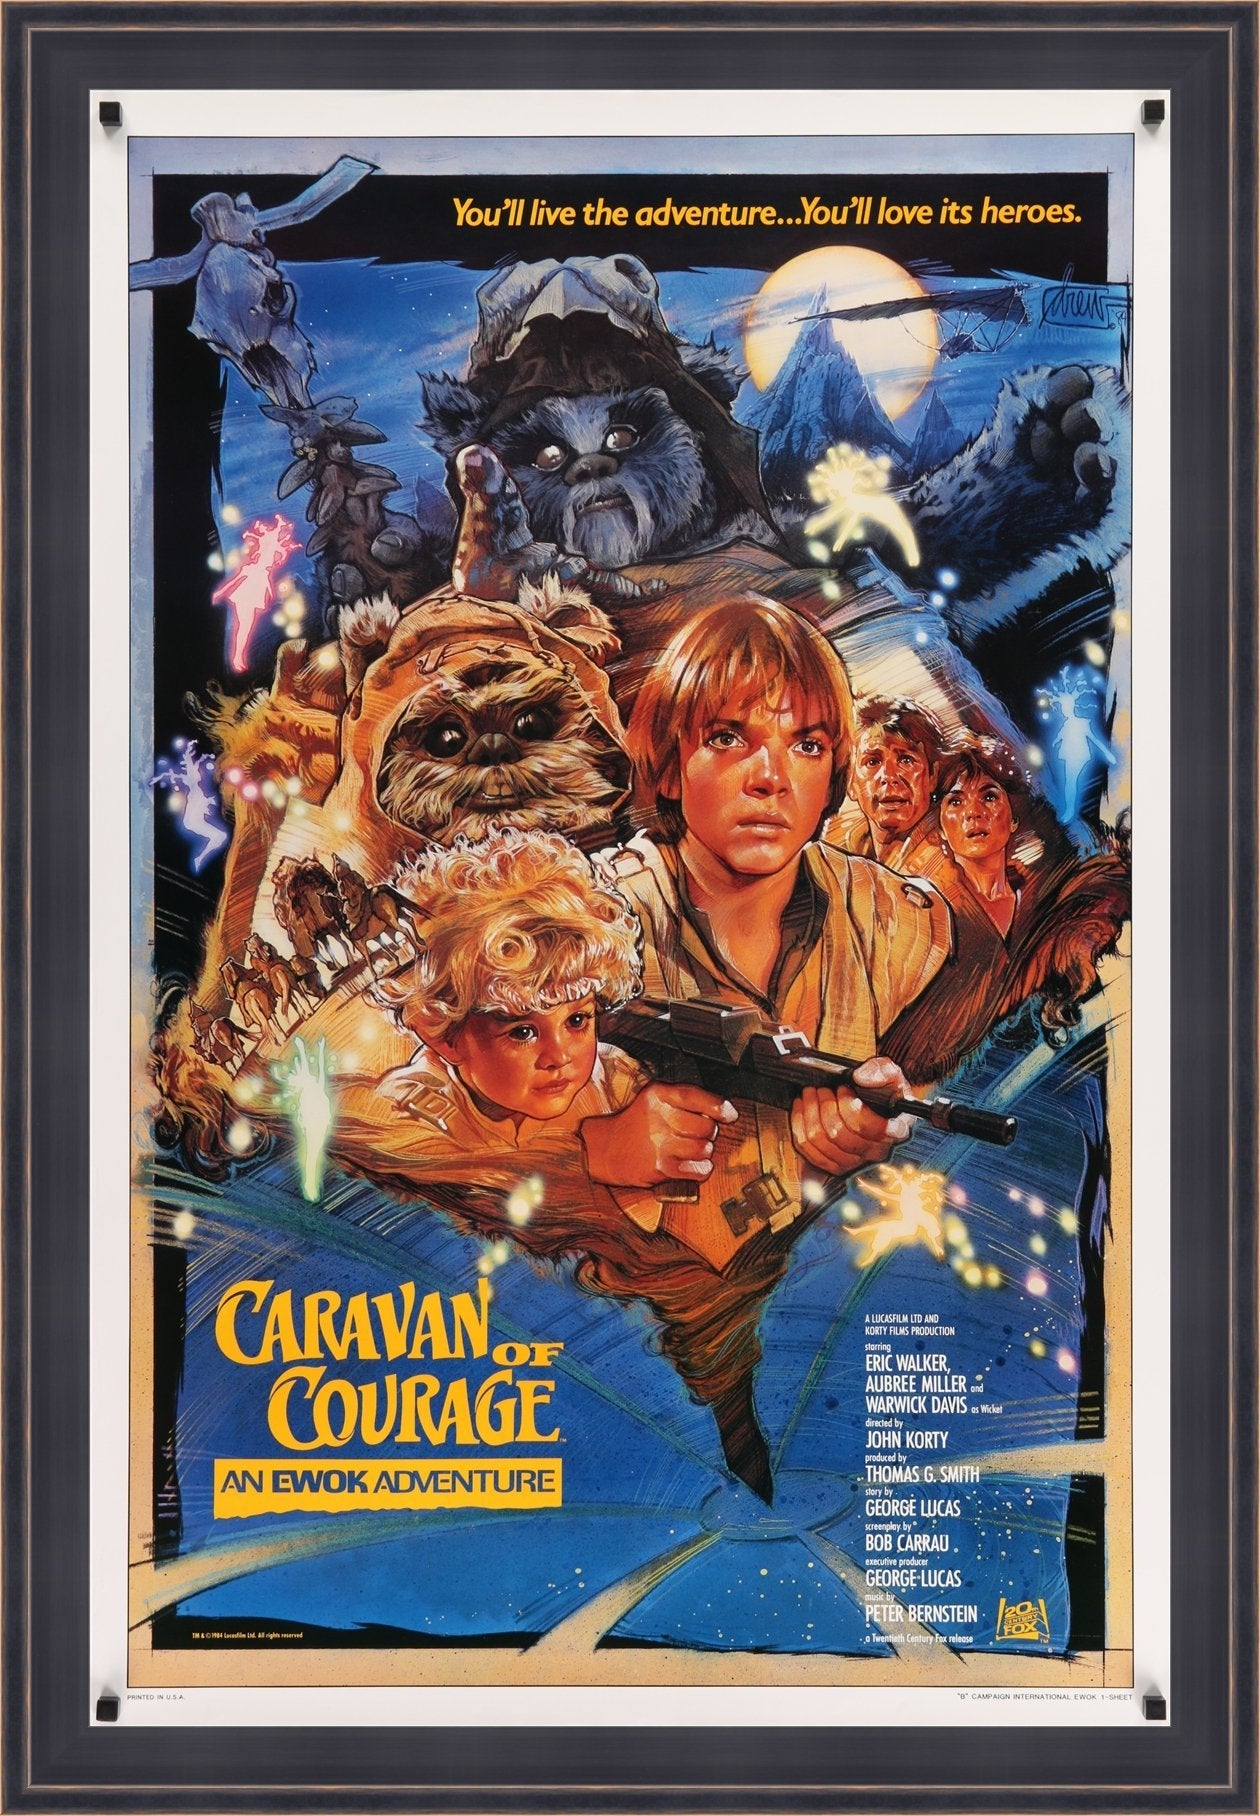 An original film / movie poster for Star Wars - Caravan of Courage